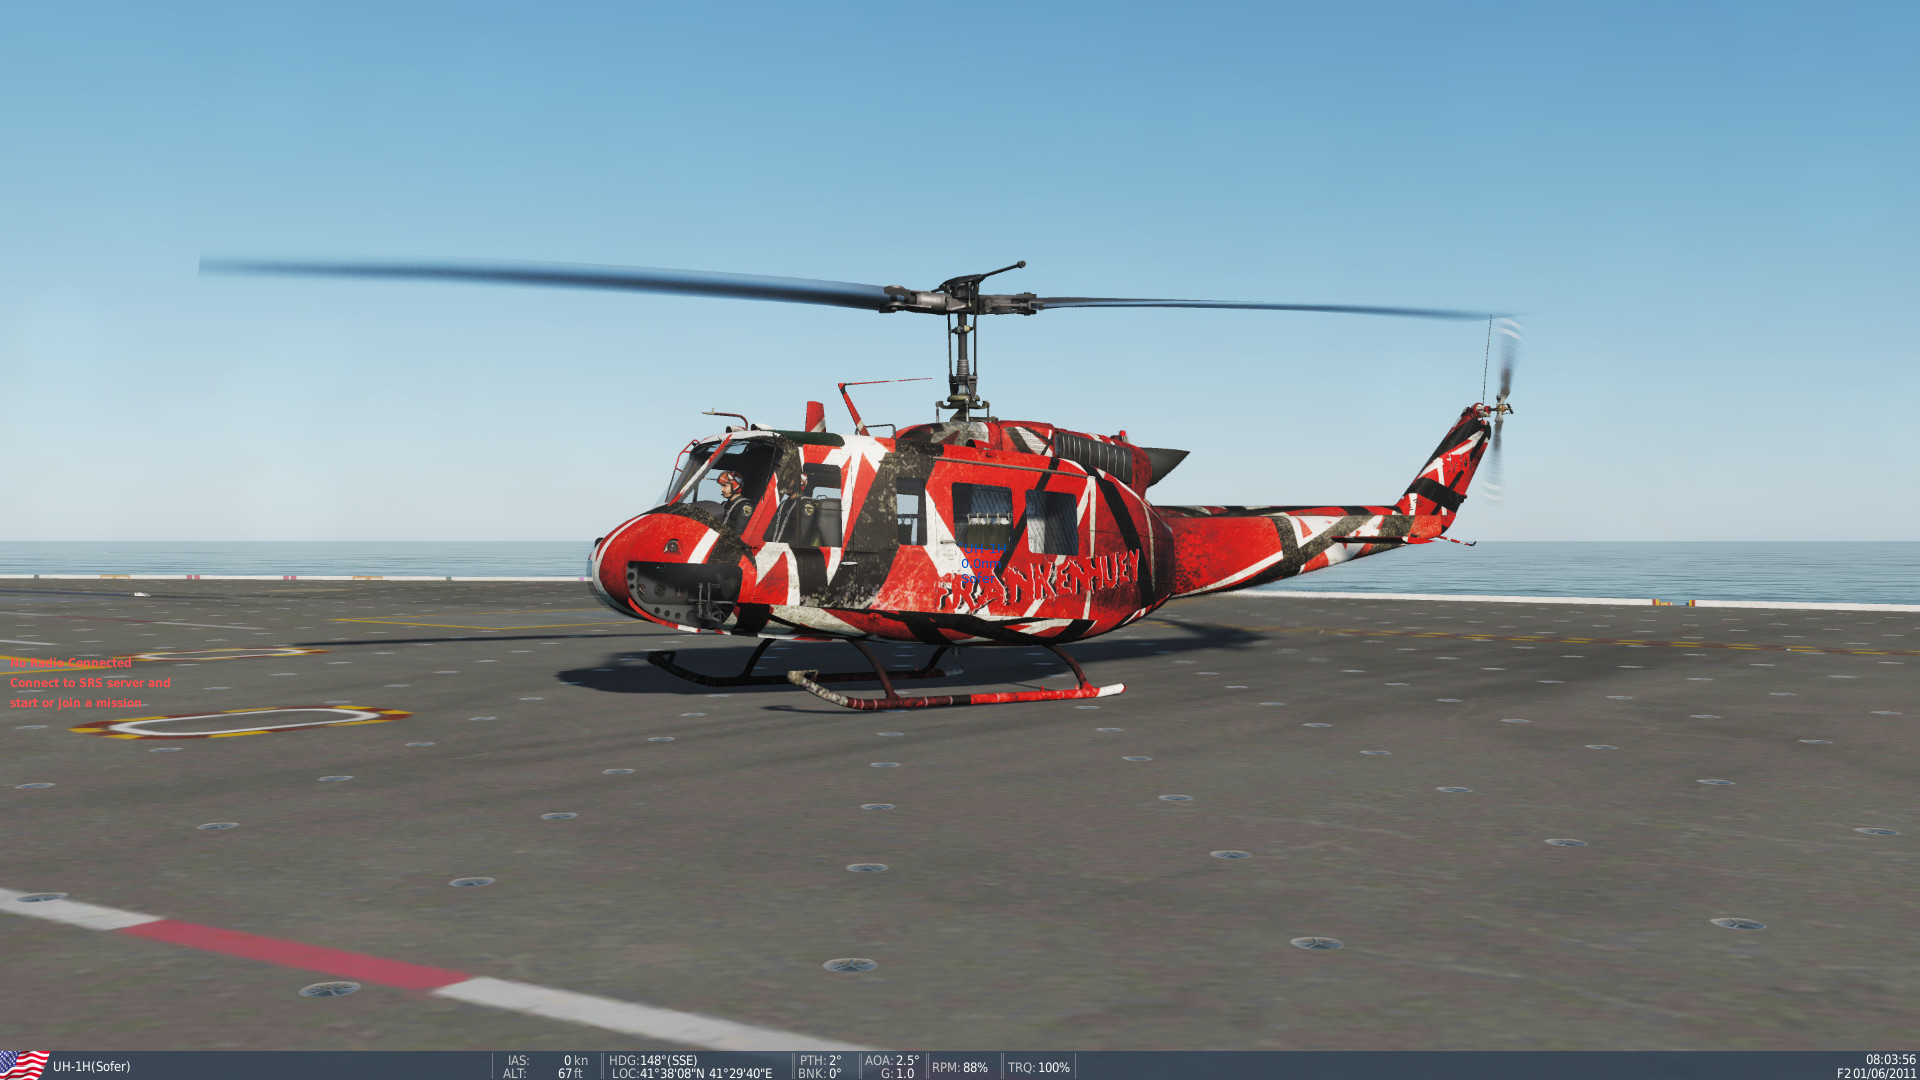 UH-1H "5150 FRANKENHUEY"